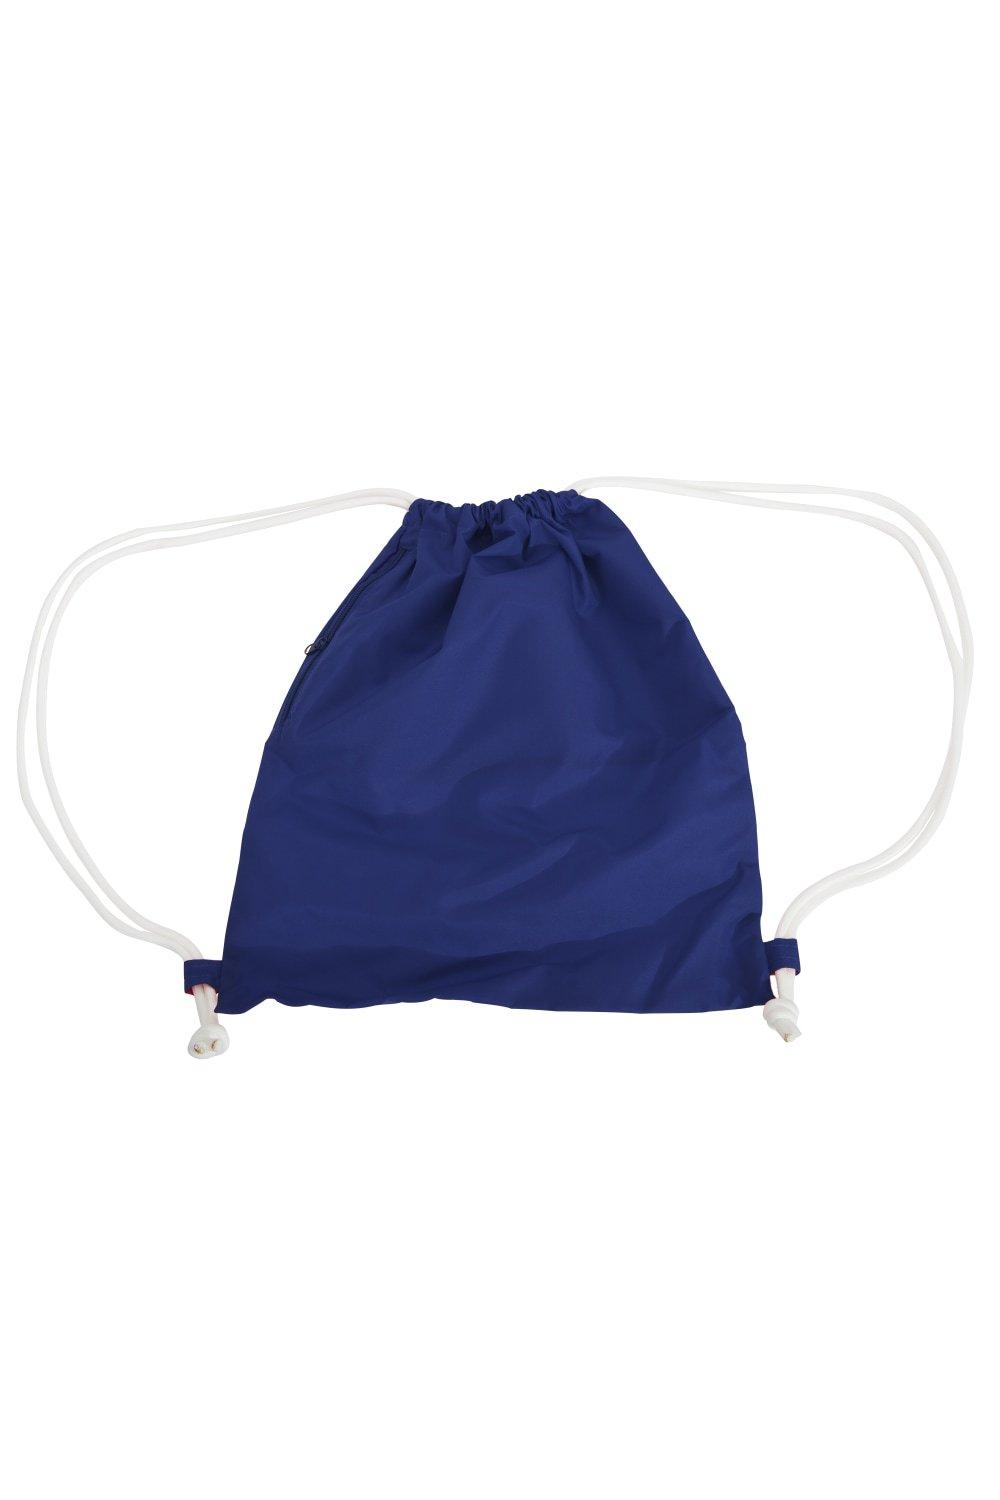 Сумка Icon на шнурке / Gymsac Bagbase, темно-синий сумка urban gymsac на шнурке sol s синий